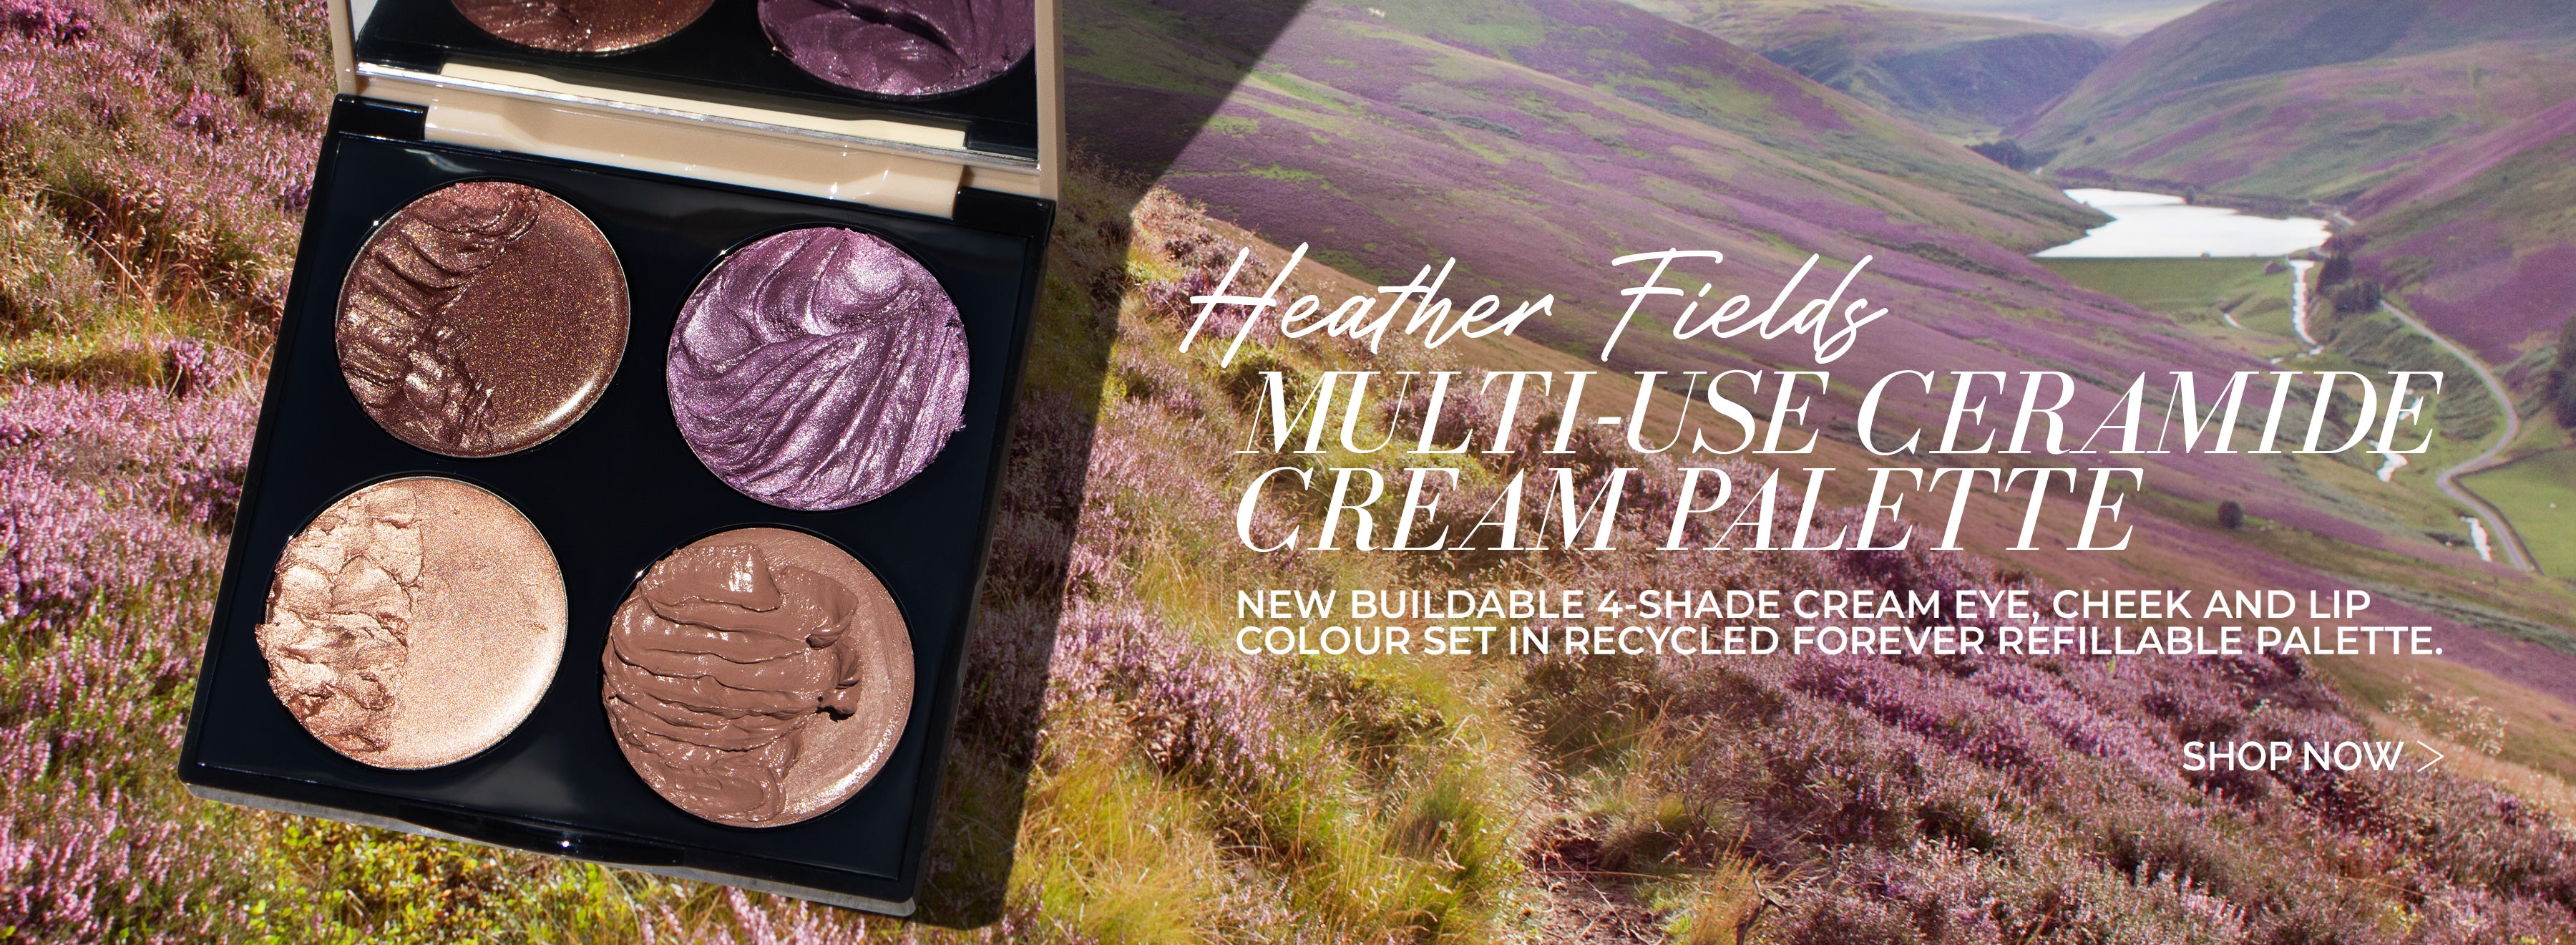 NEW Heather Fields Multi-Use Ceramide Cream Palette